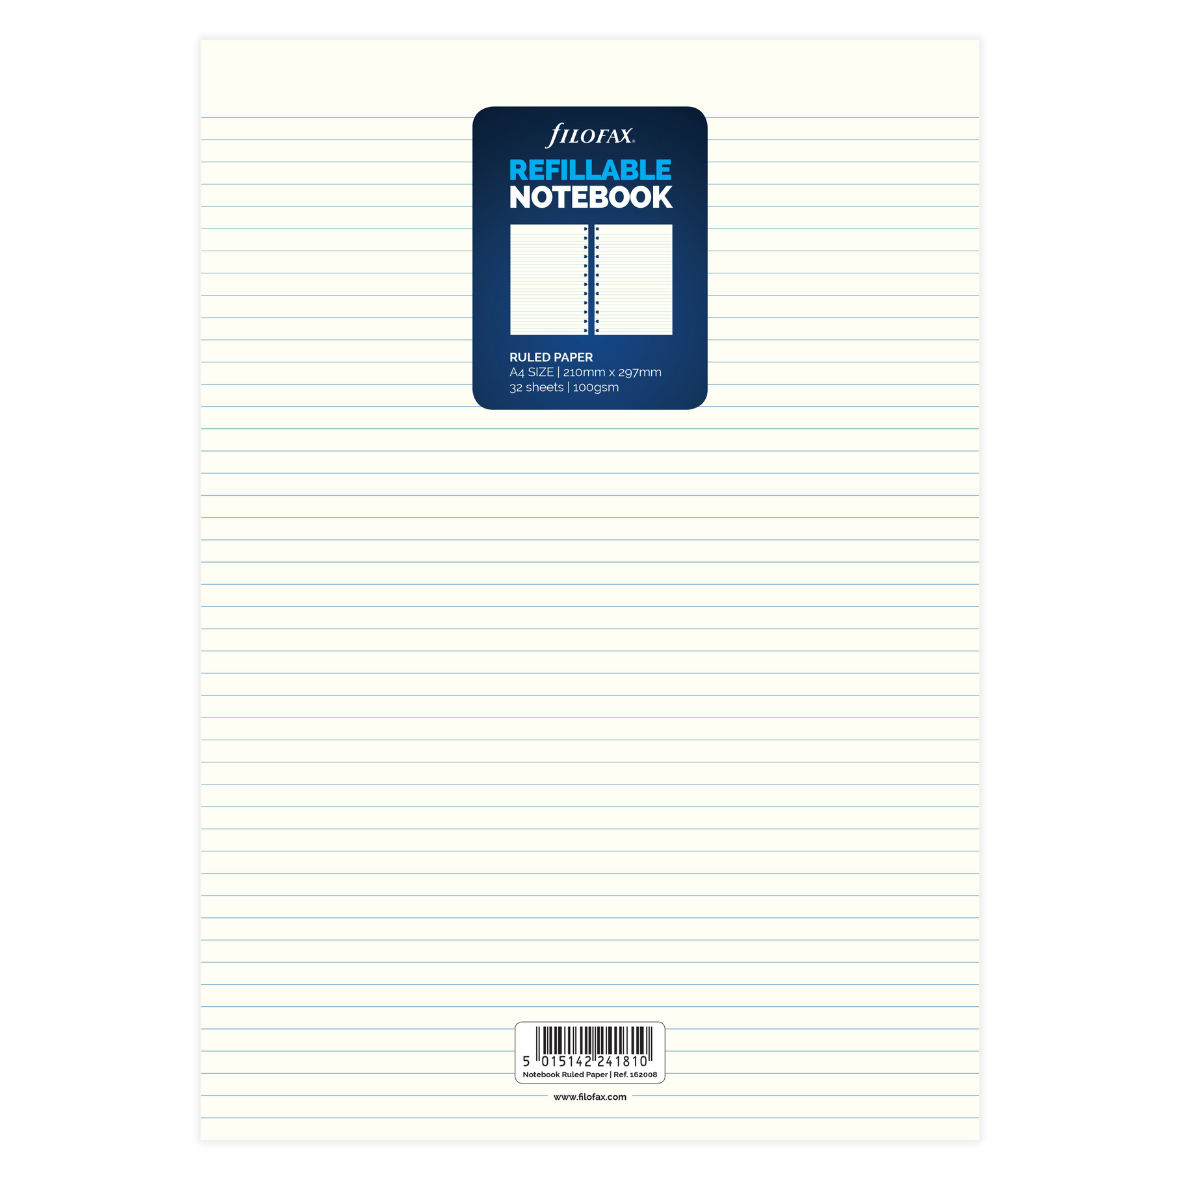 162008_Filofax Notebooks A4 Ruled Insert Card.jpg